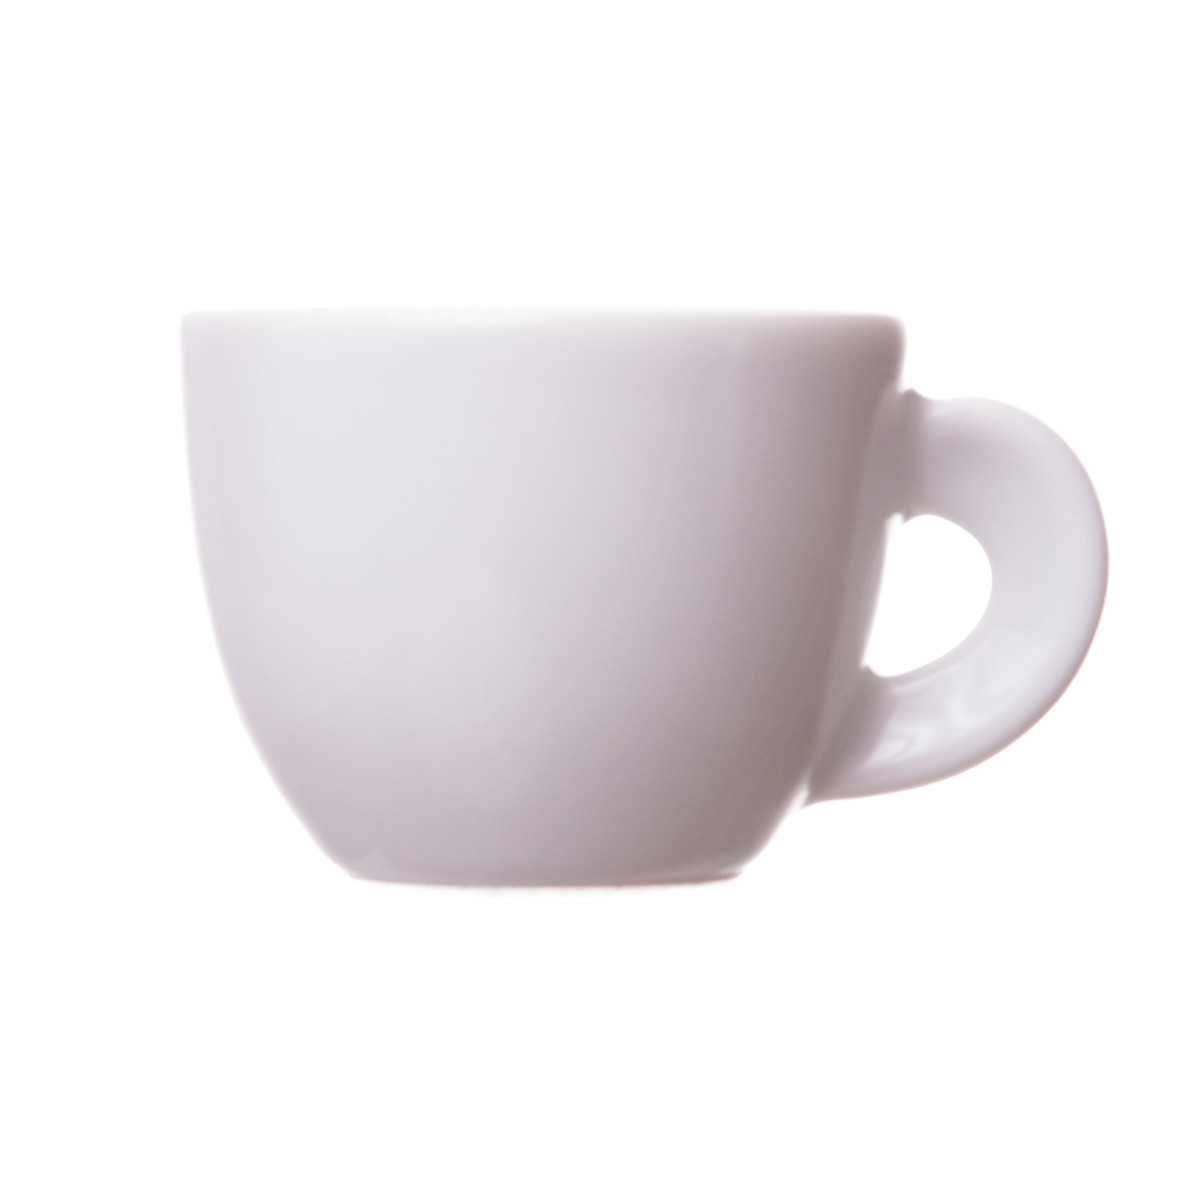 6.4 oz Espresso Cups Demitasse Clear Glass Espresso Drinkware